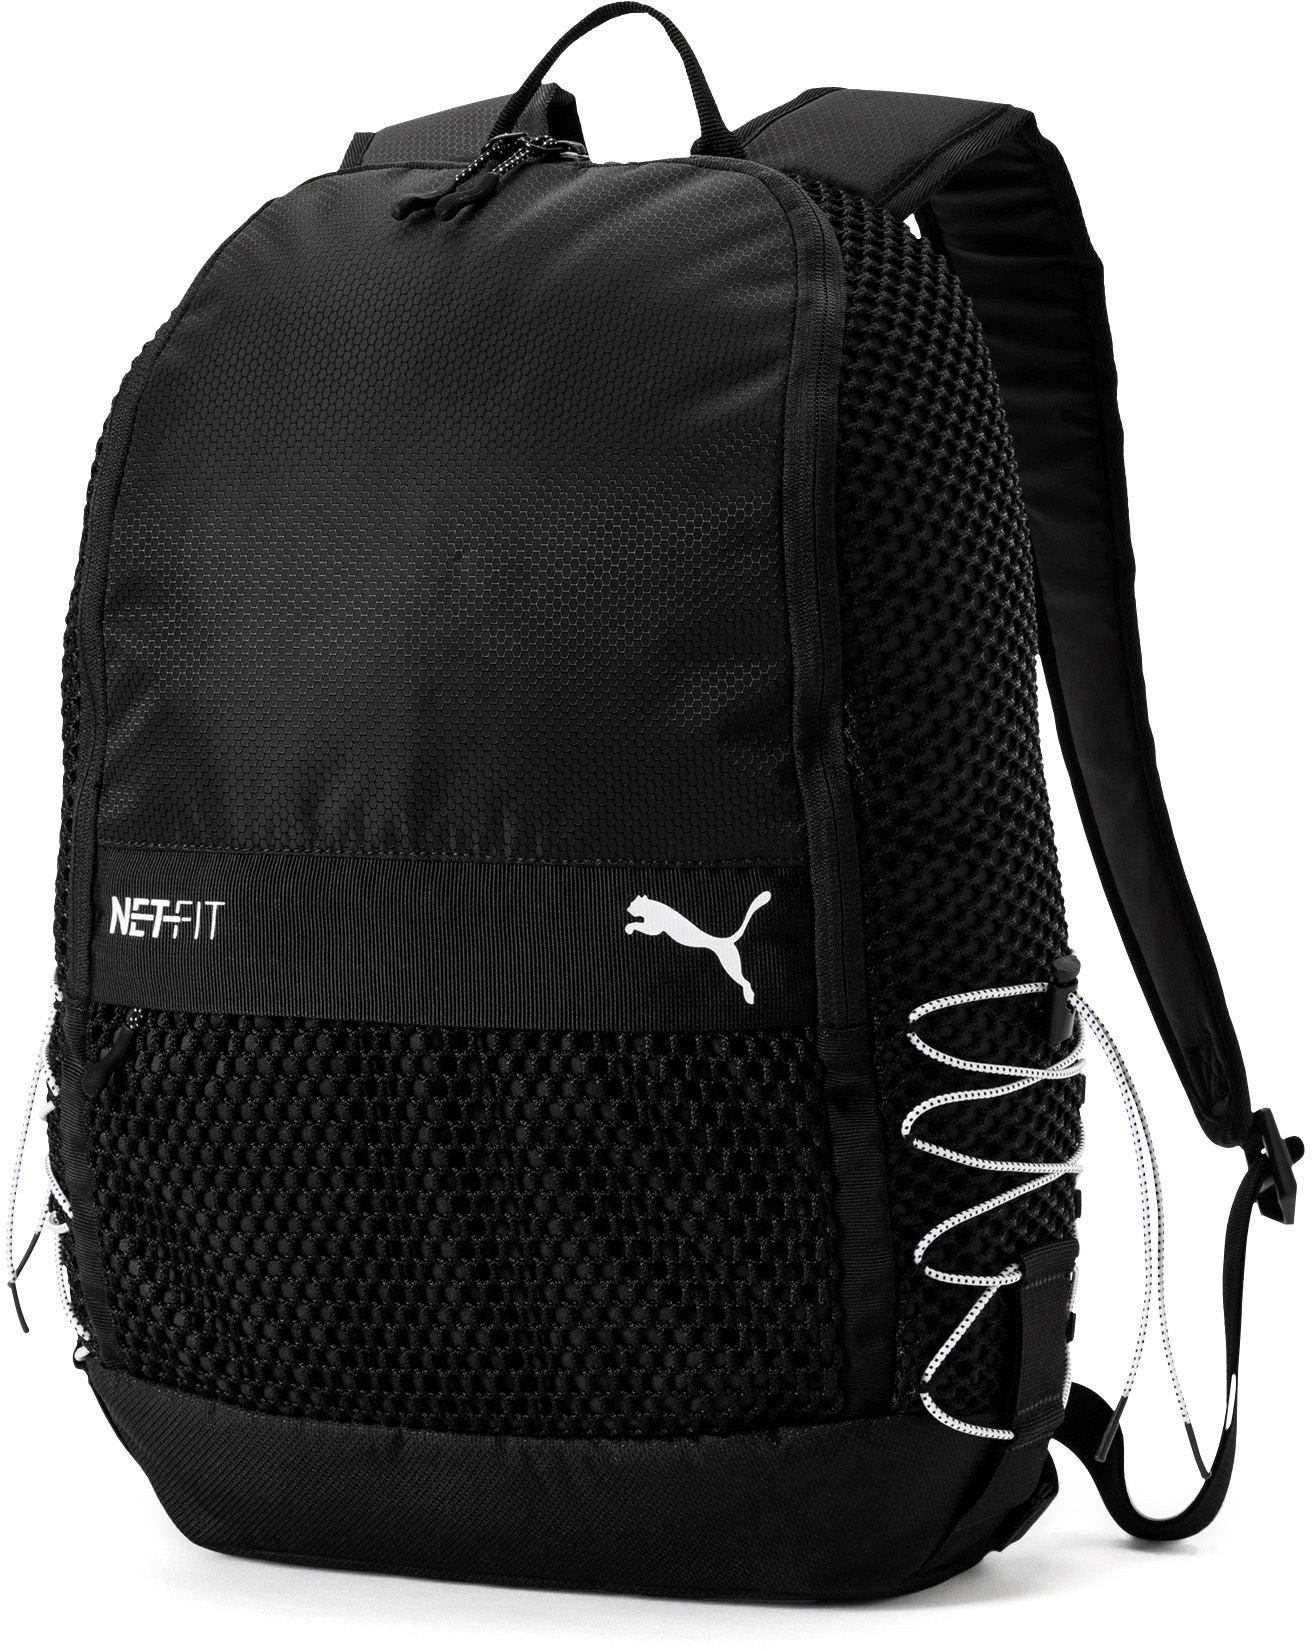 Puma Backpack Netfit Black